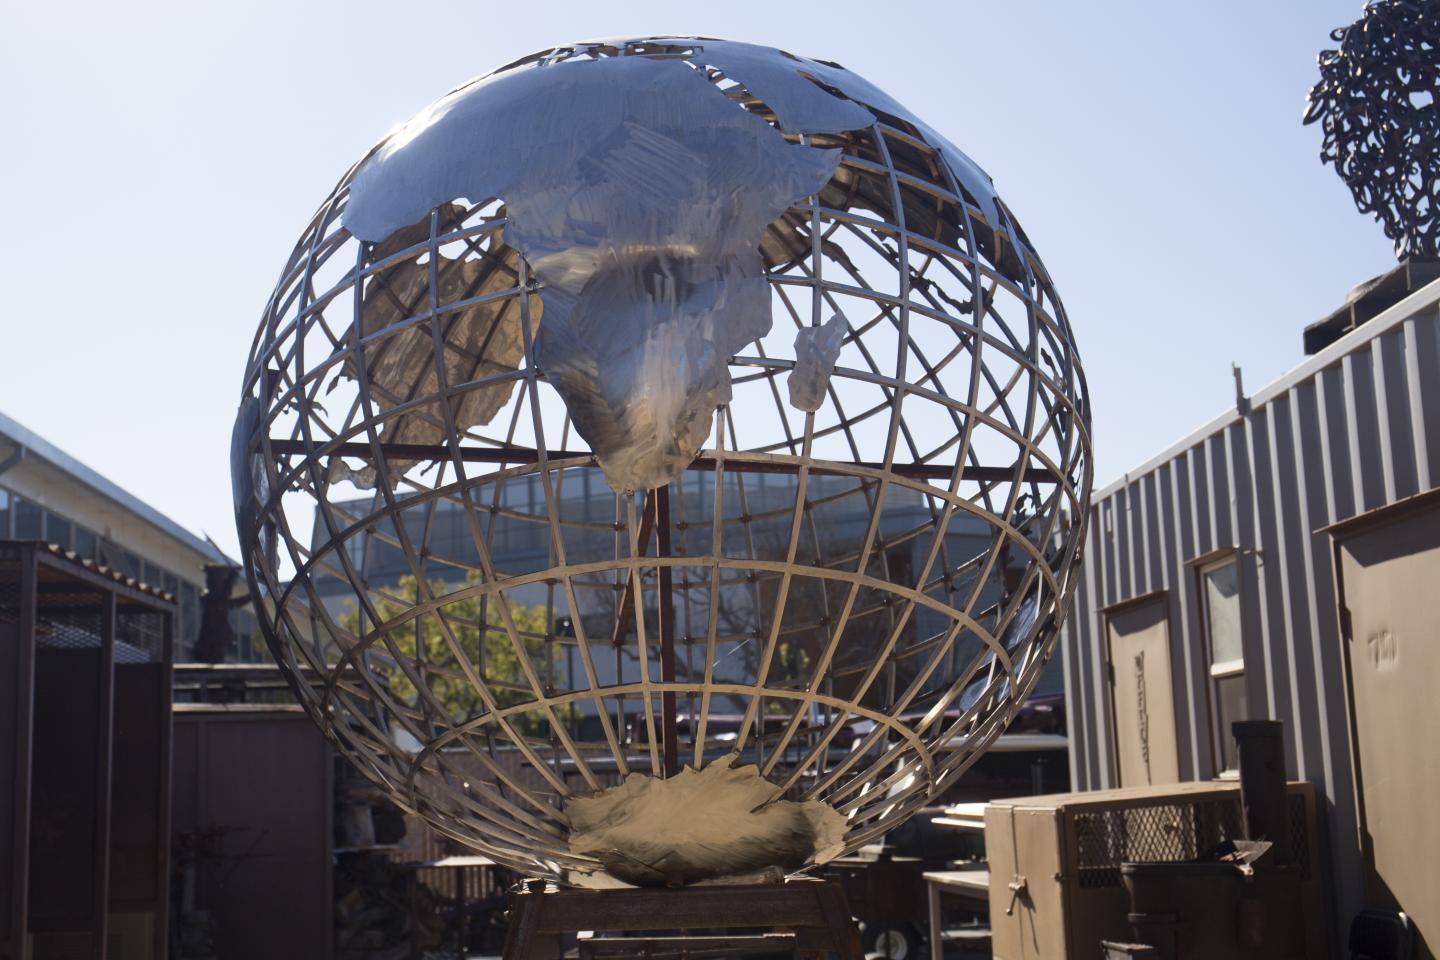 Welded globe created by Ventura College Welding Program